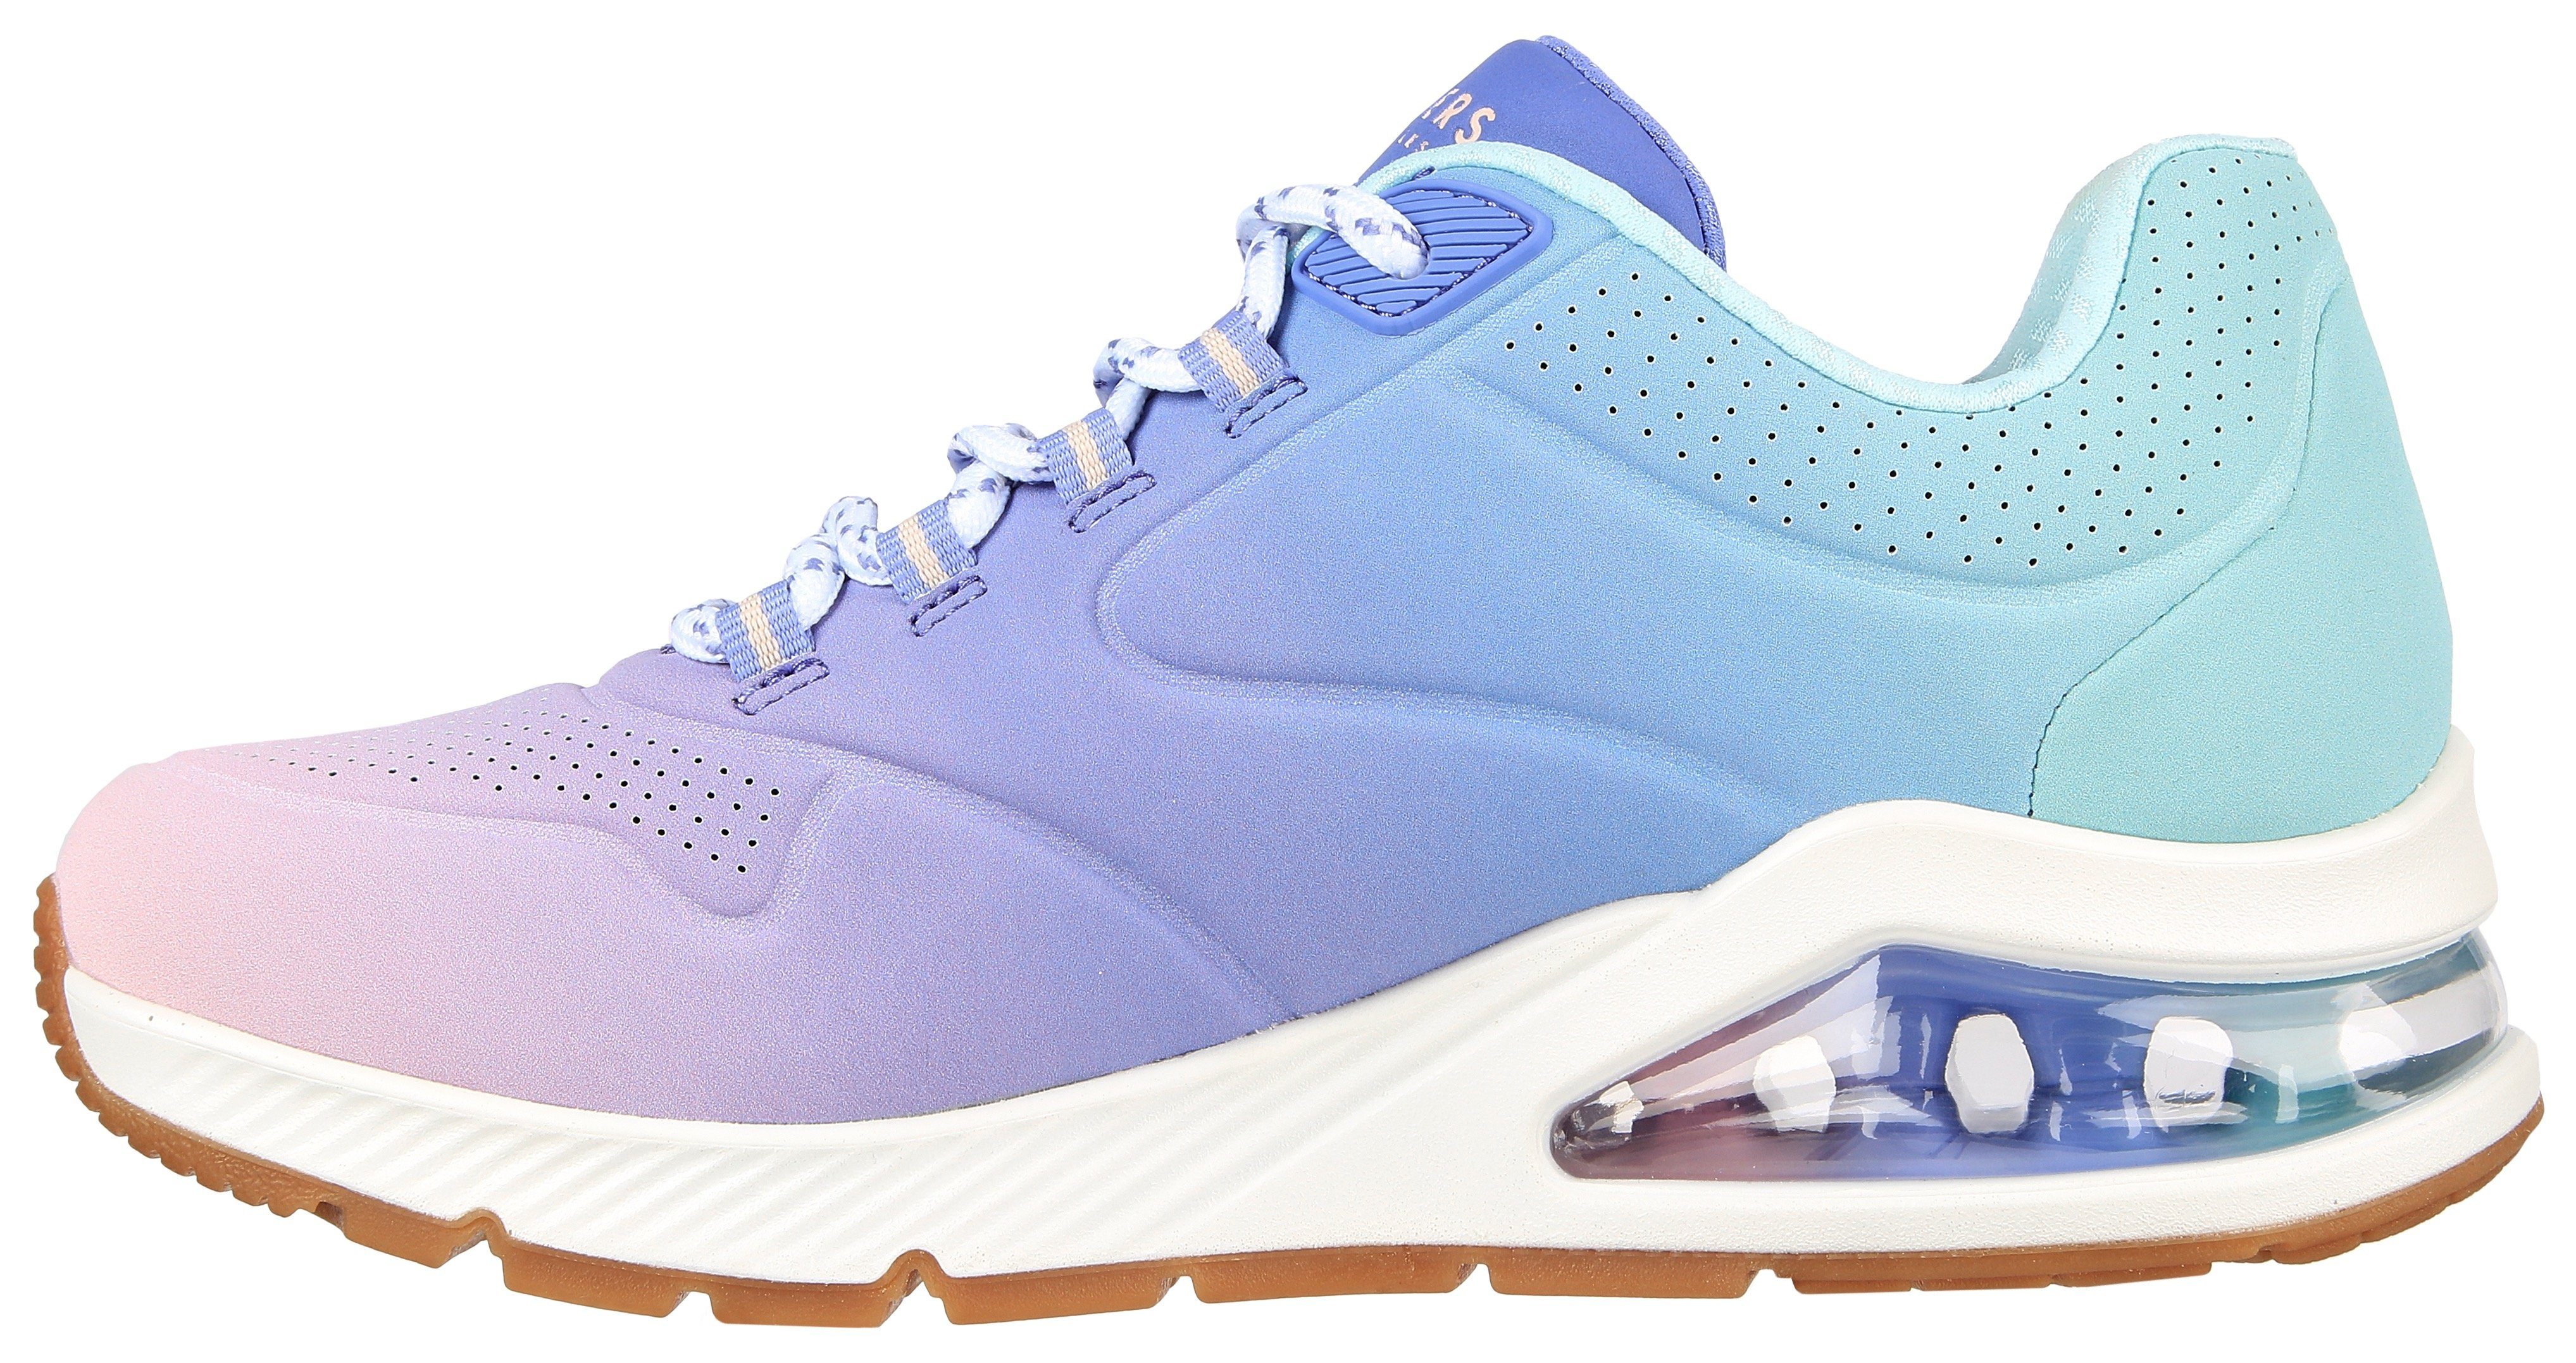 Skechers UNO 2 blau Sneaker AWAY OMBRE in kombiniert Farbkombi leuchtender